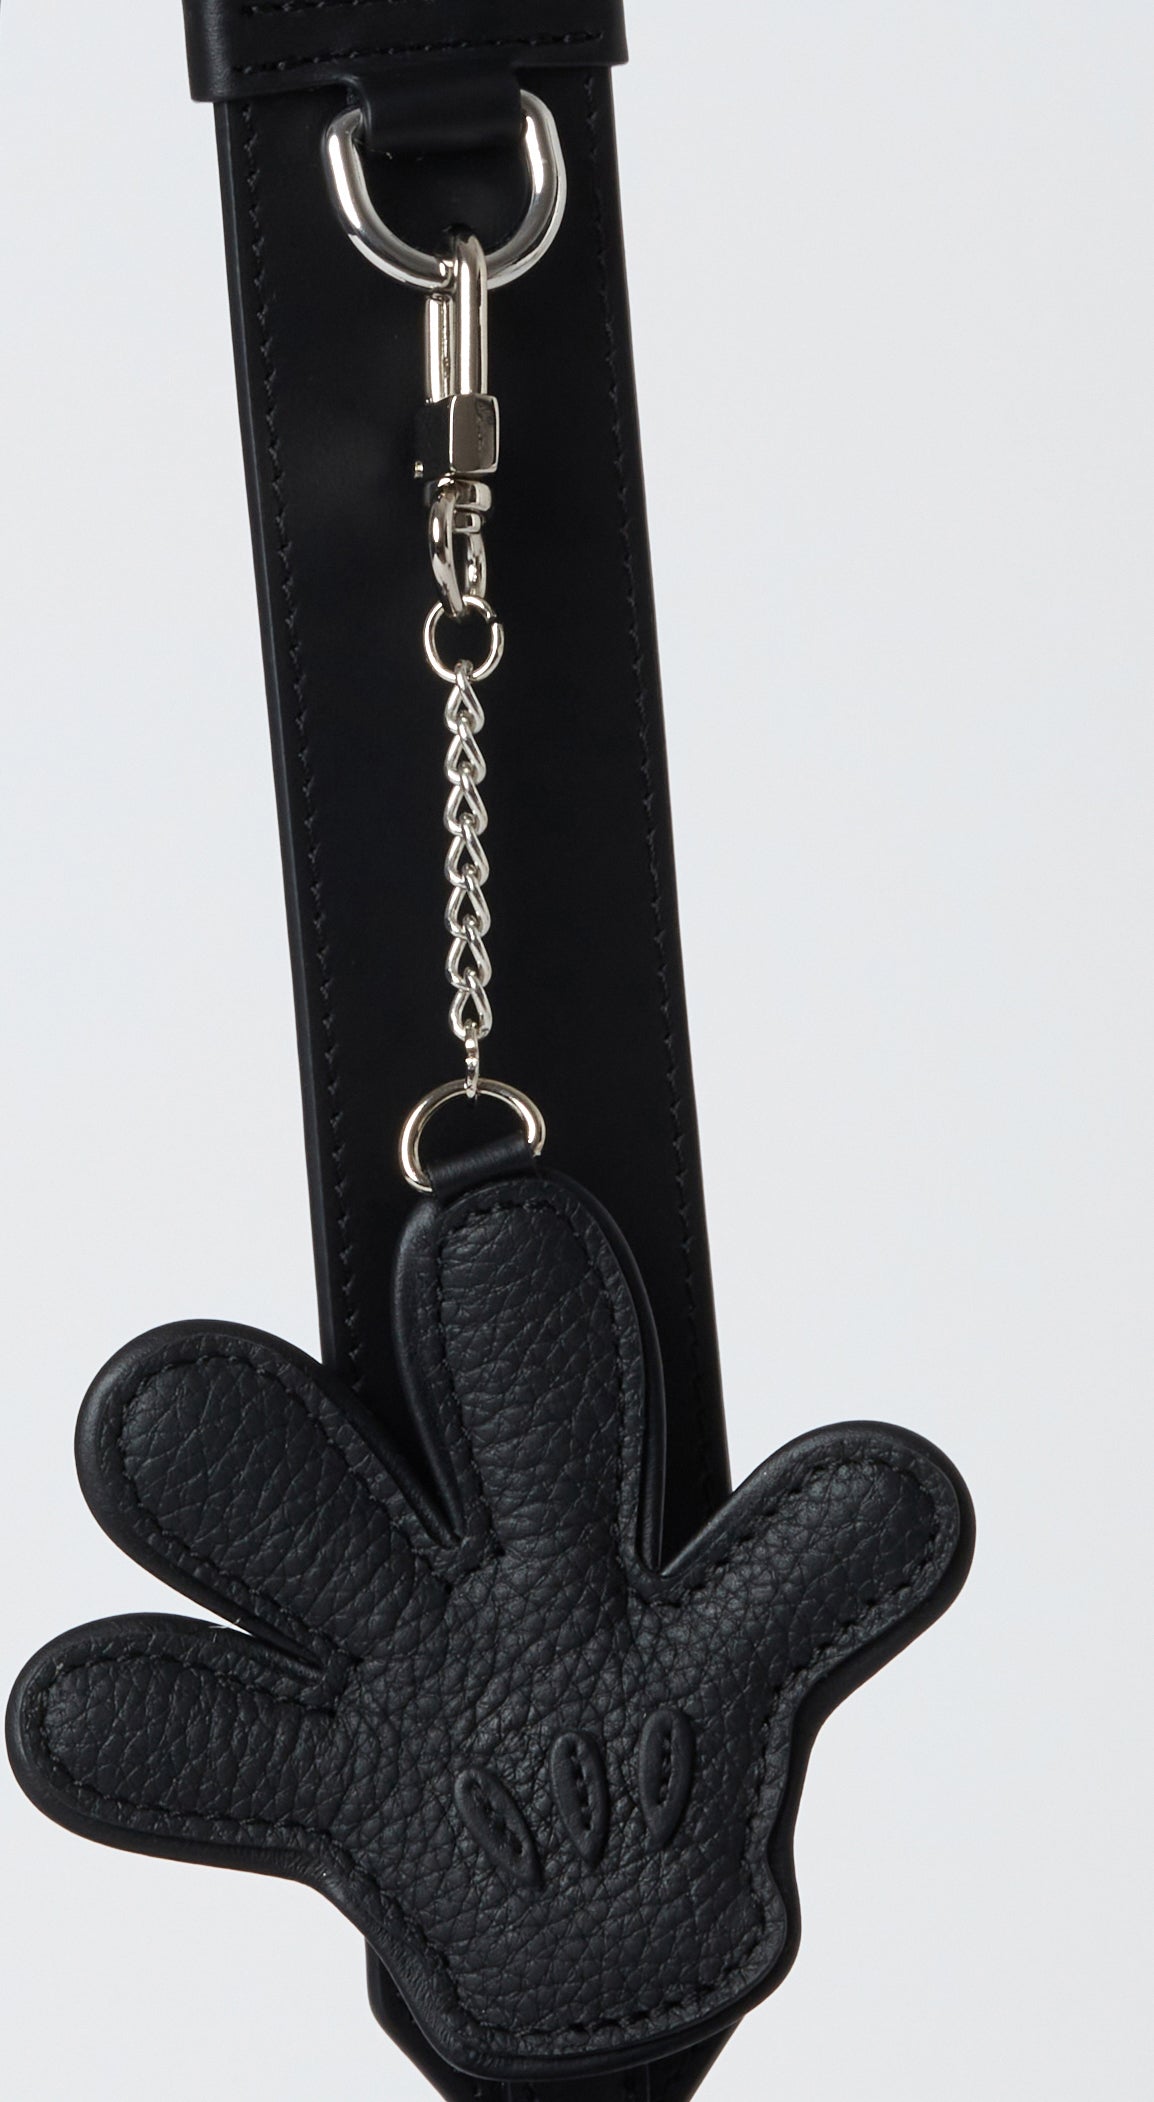 NTWRK Exclusive Sheron Barber Black Minnie Mouse Crossbody Bag